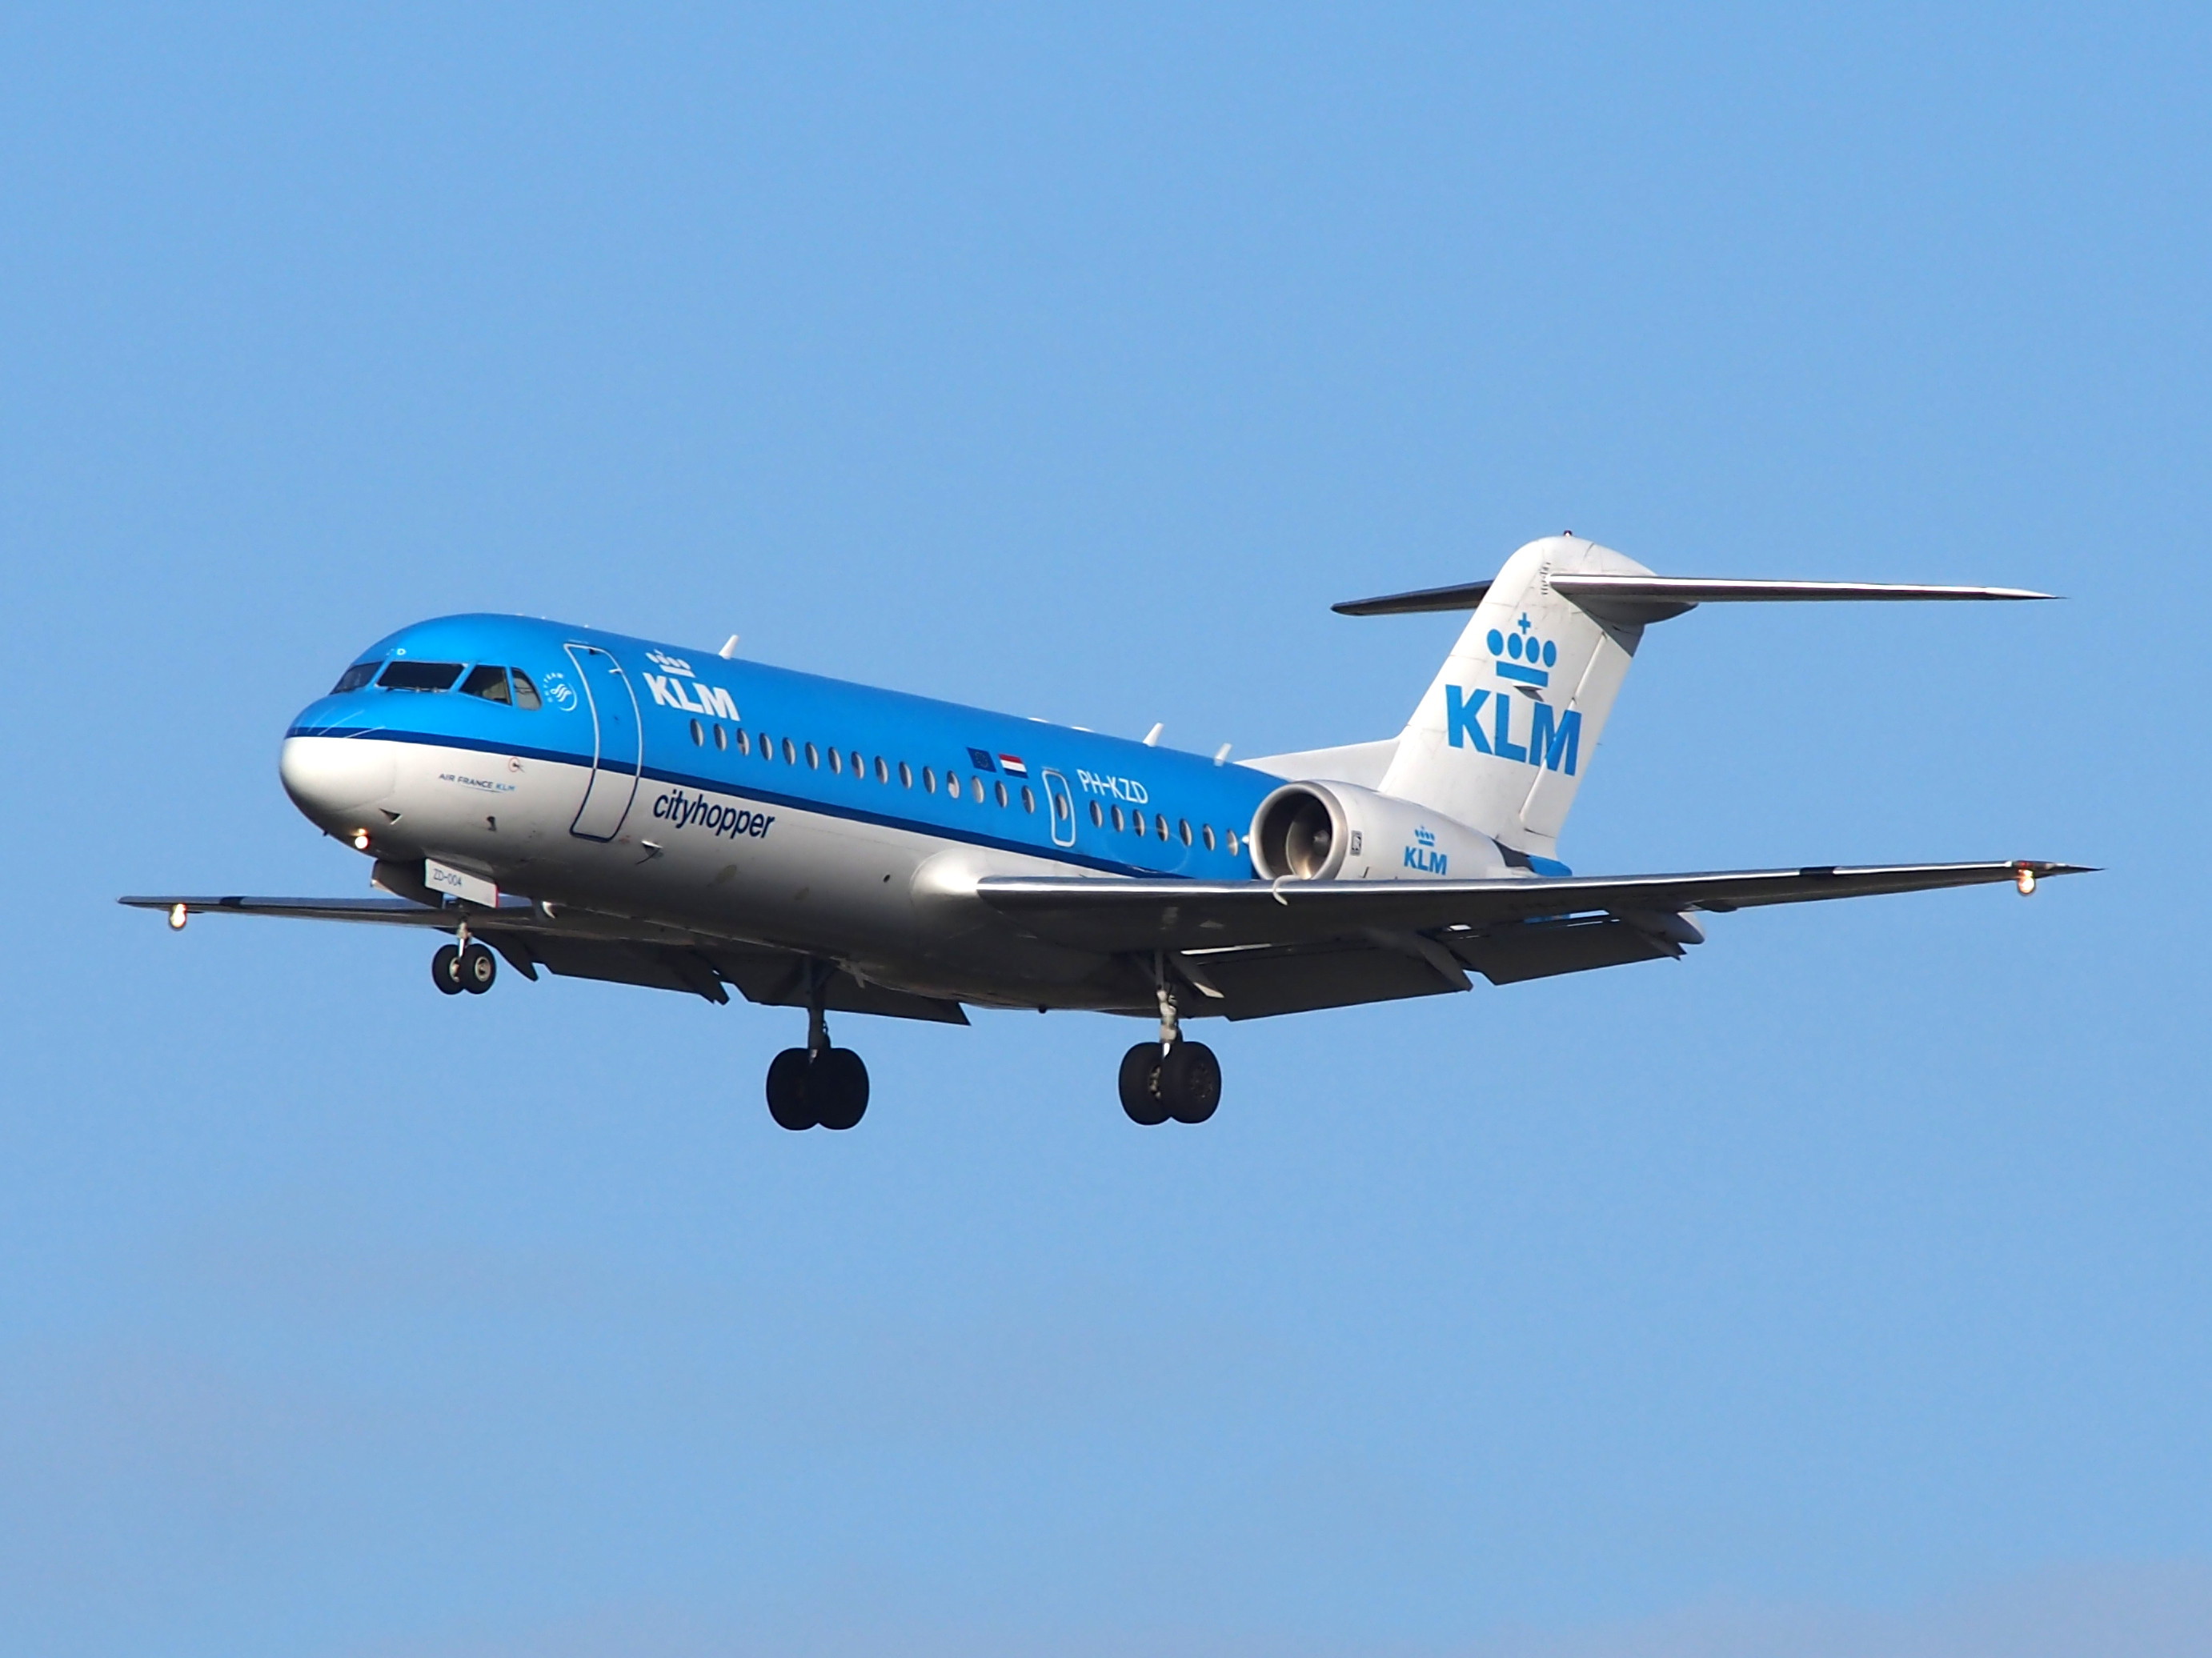 PH-KZD, landing at Schiphol on 2Feb2014 pic18